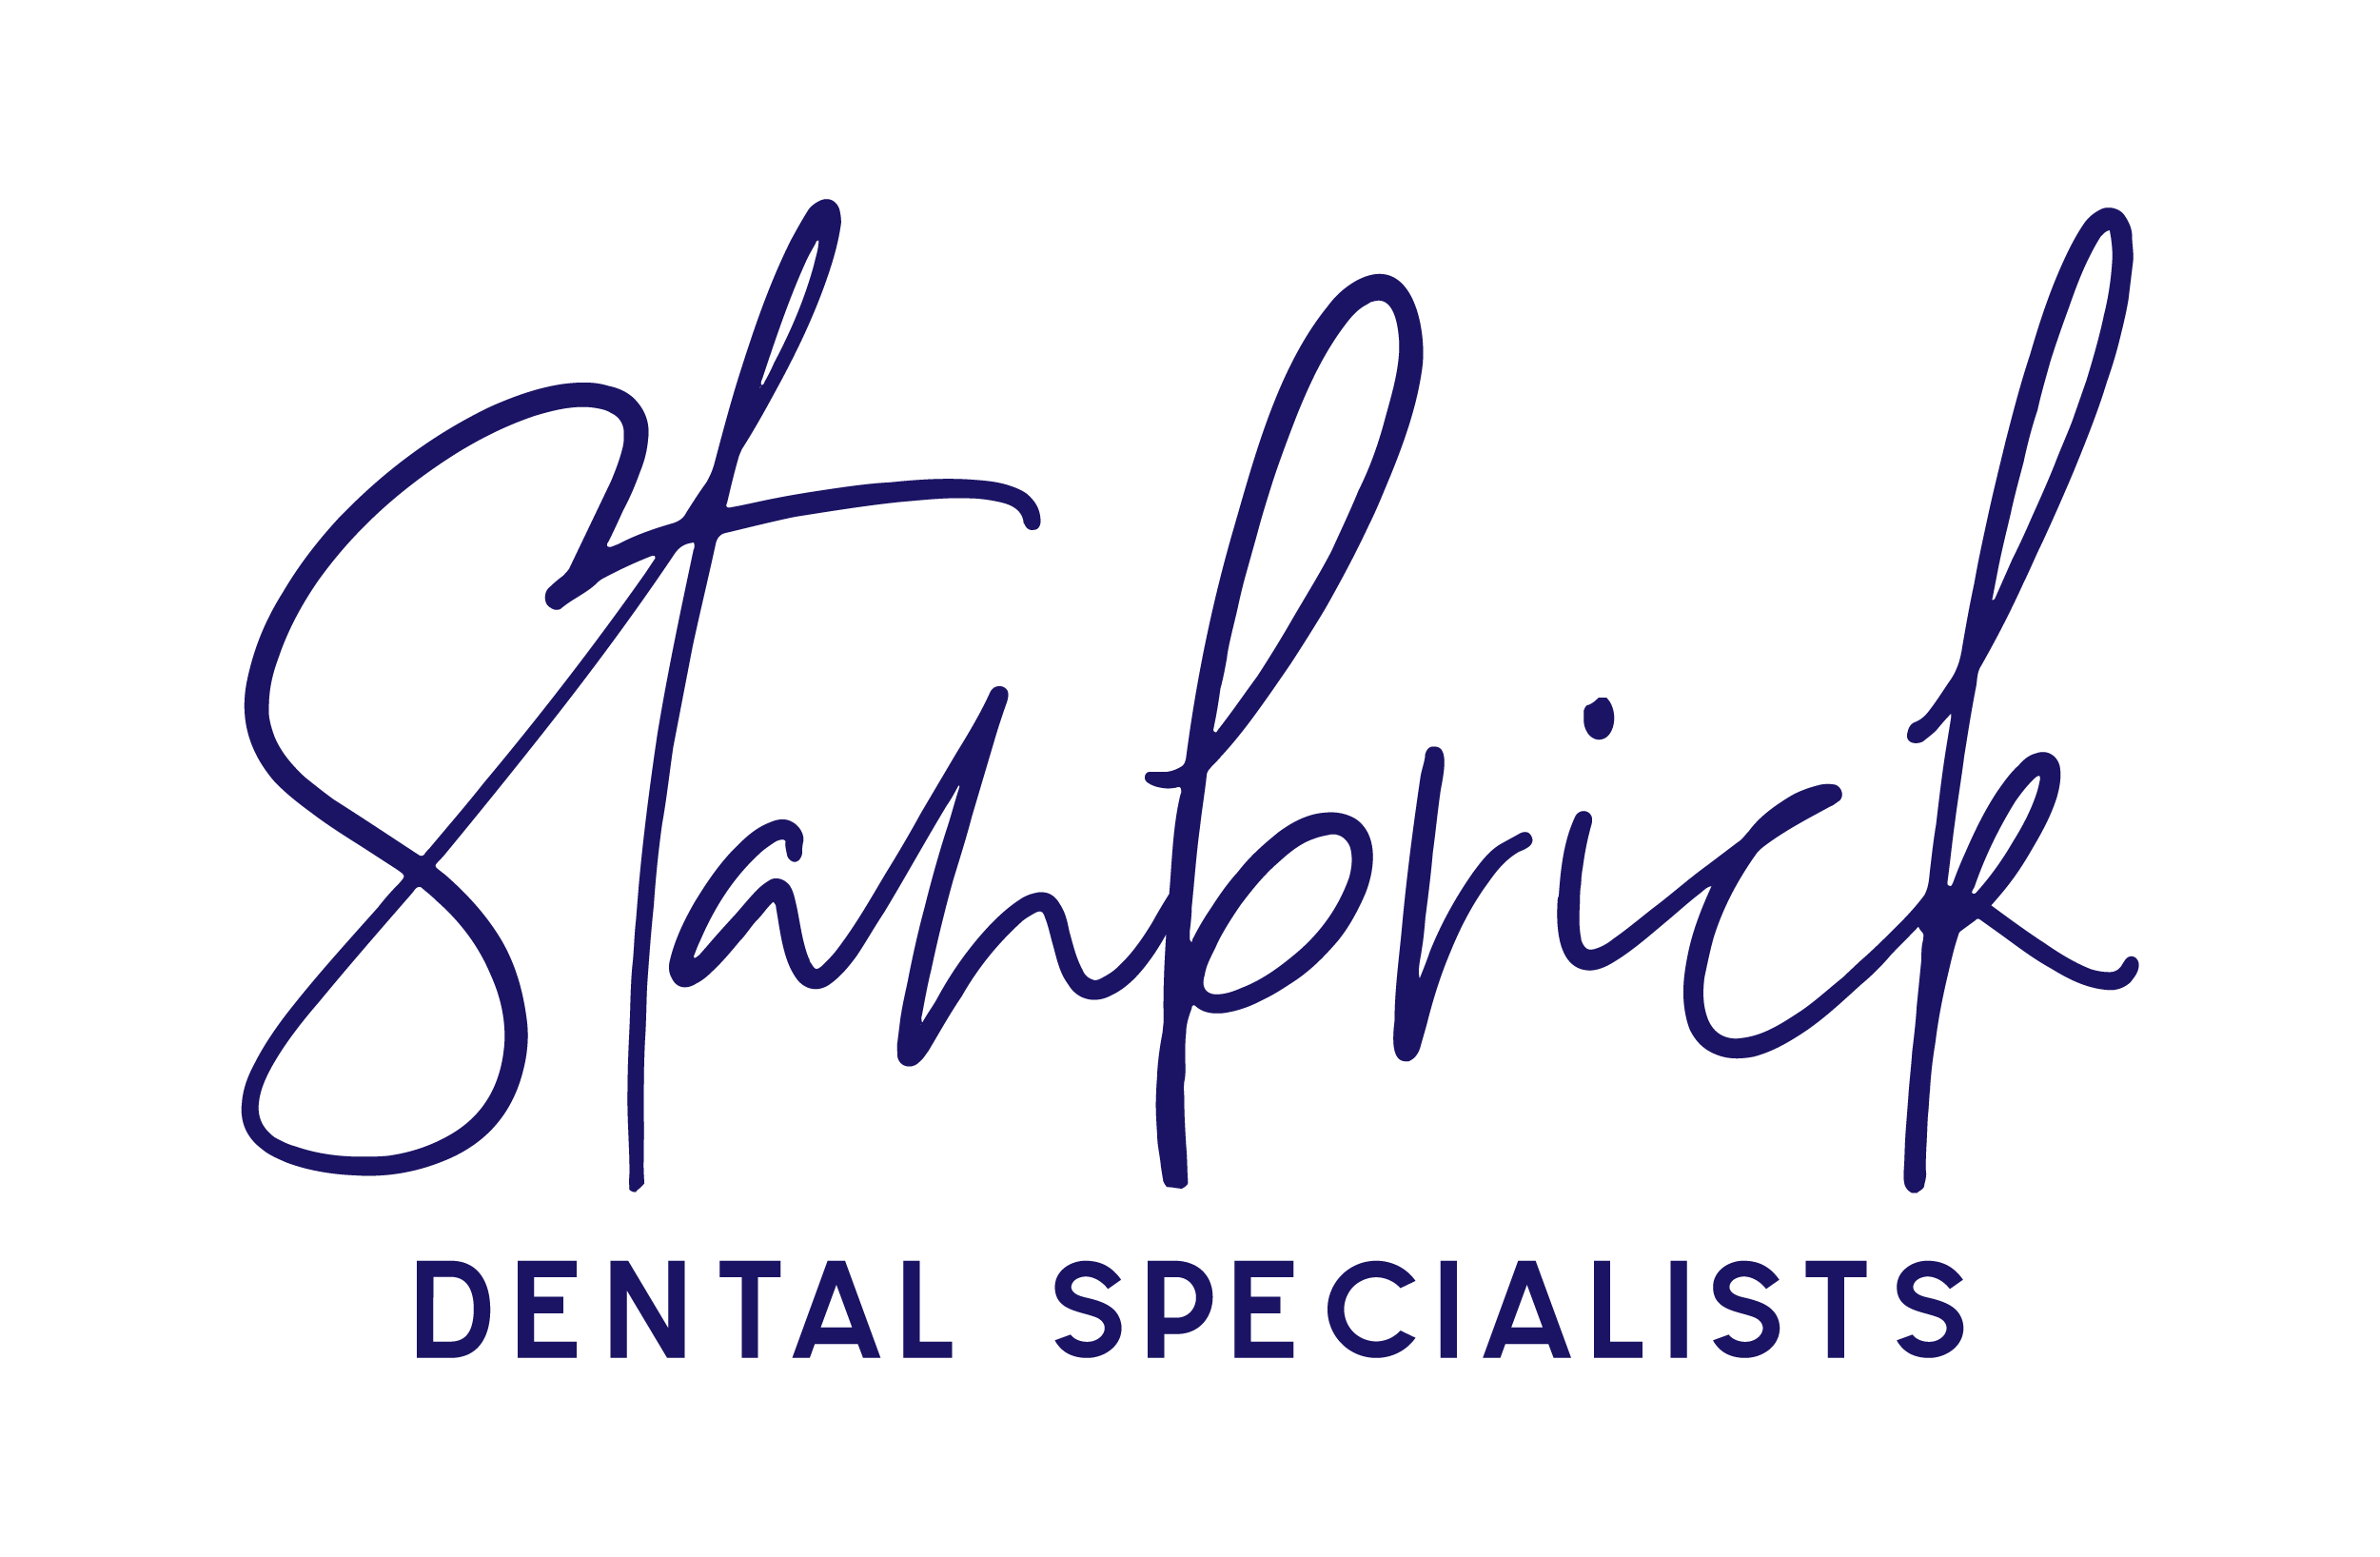 Stanbrick Dental Specialists